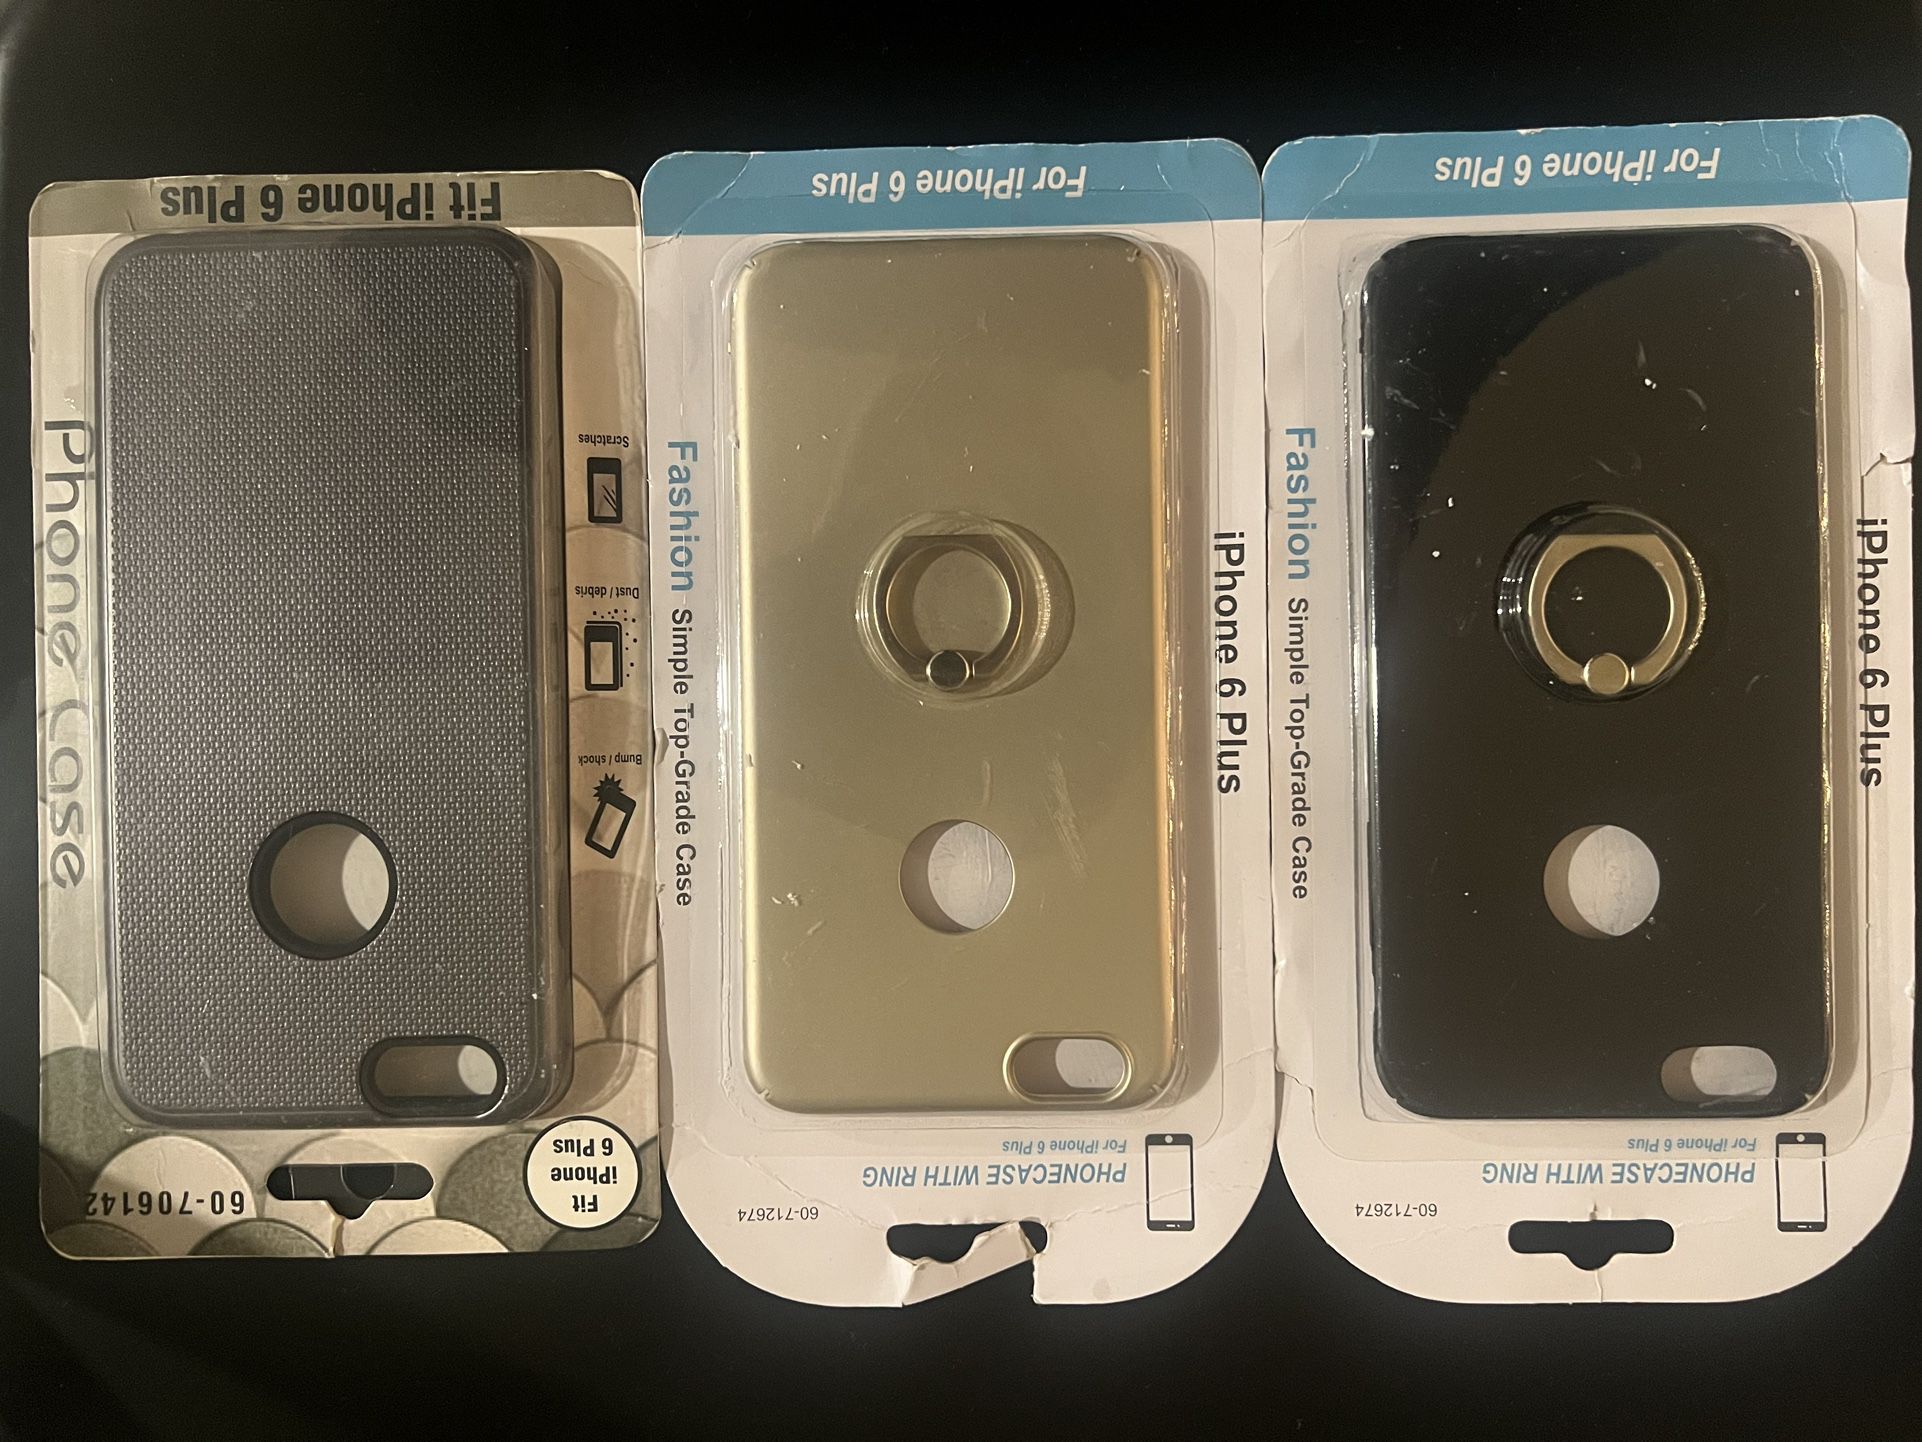 Brand New iPhone Cases